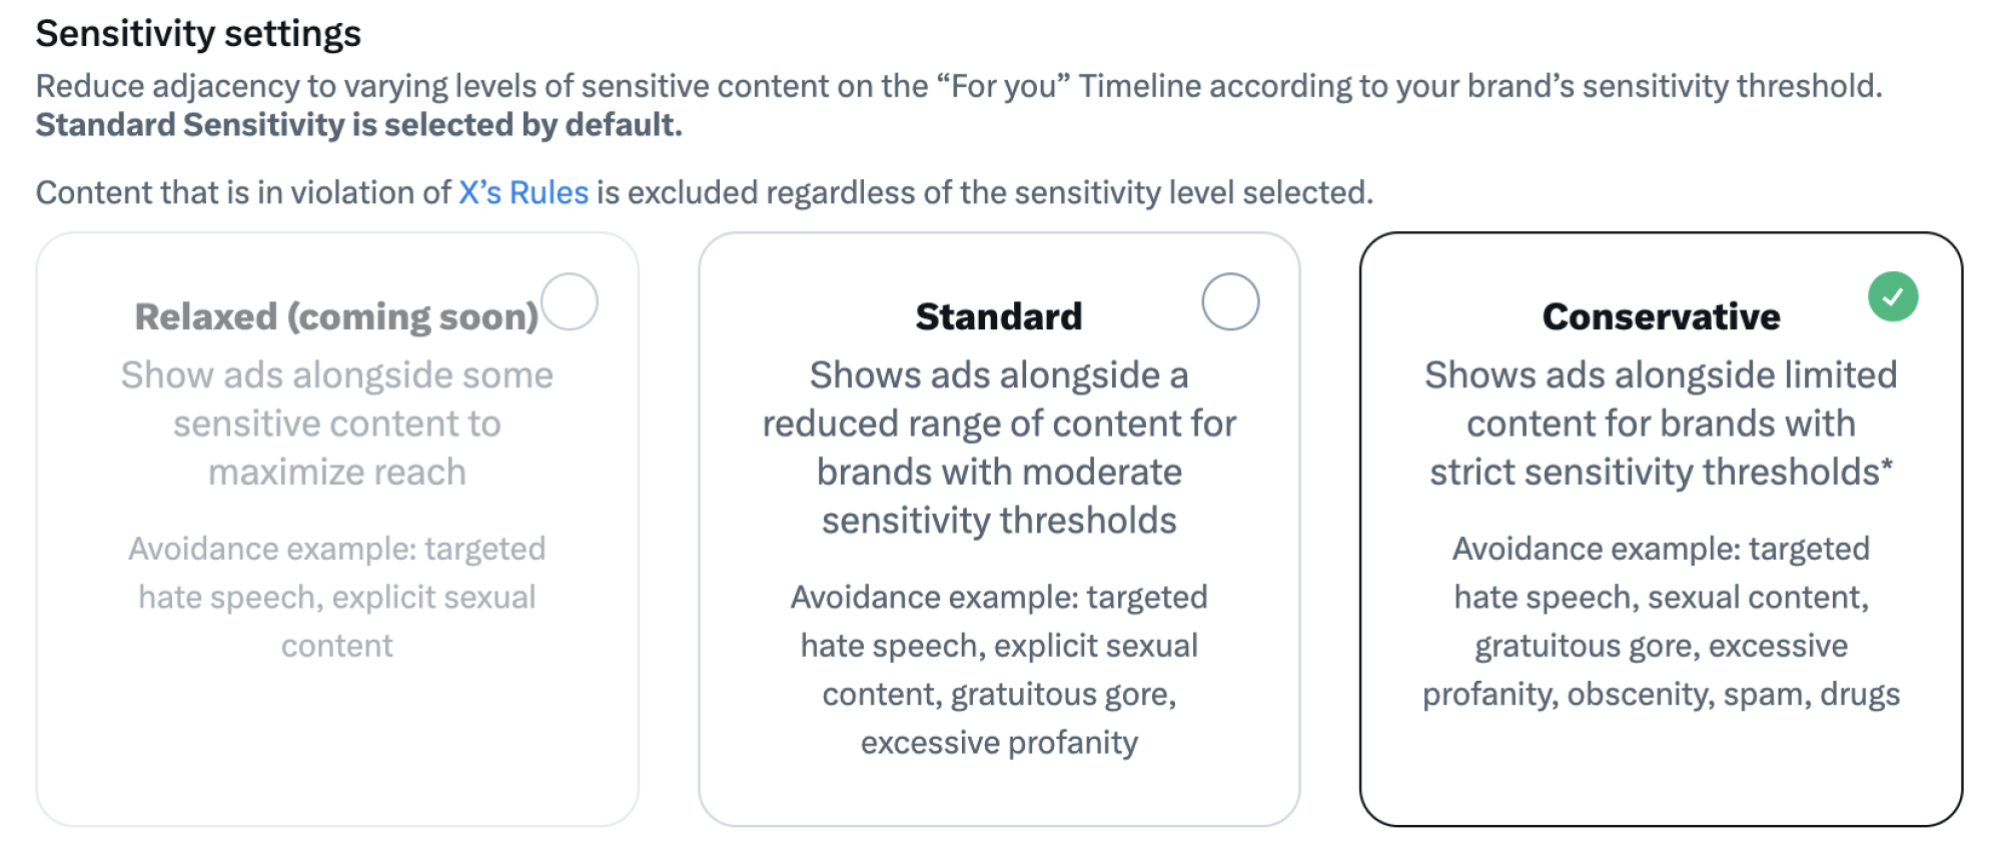 Screenshot of the sensitivity setting panel